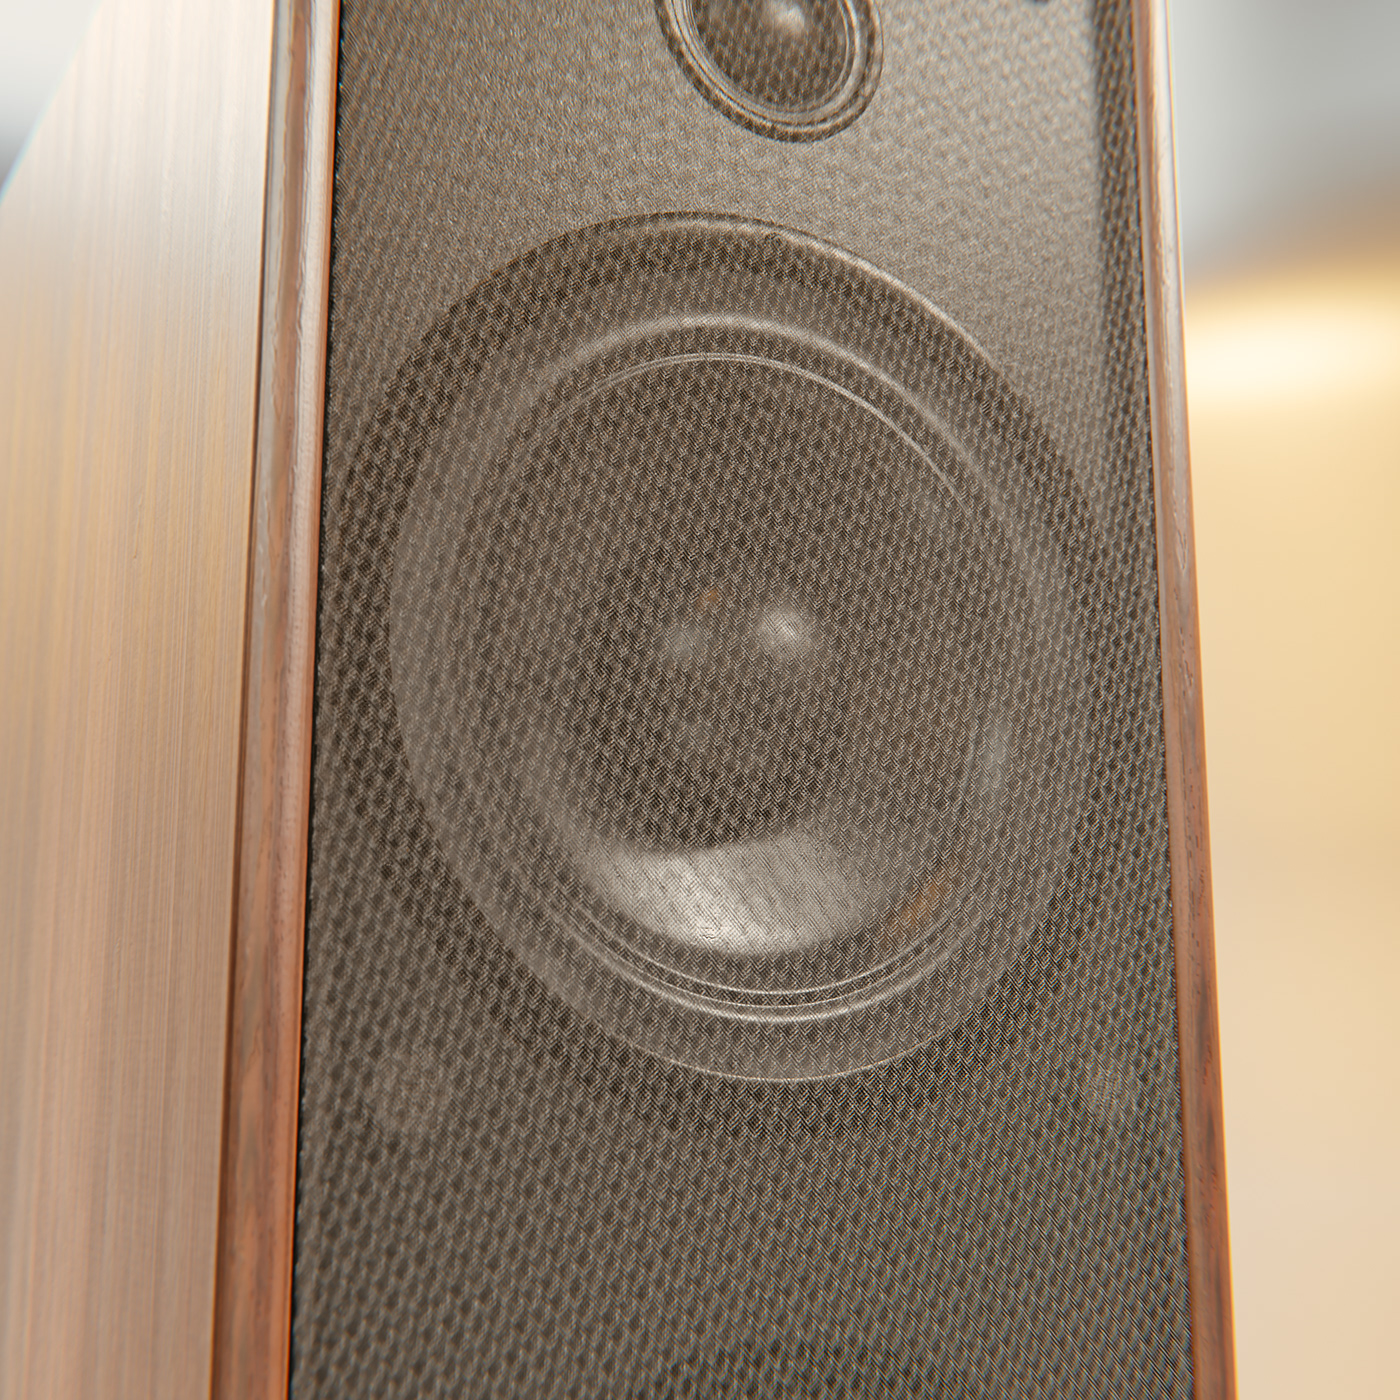 loudspeaker speaker product design  3d modeling visualization 3D Render archviz CGI modern